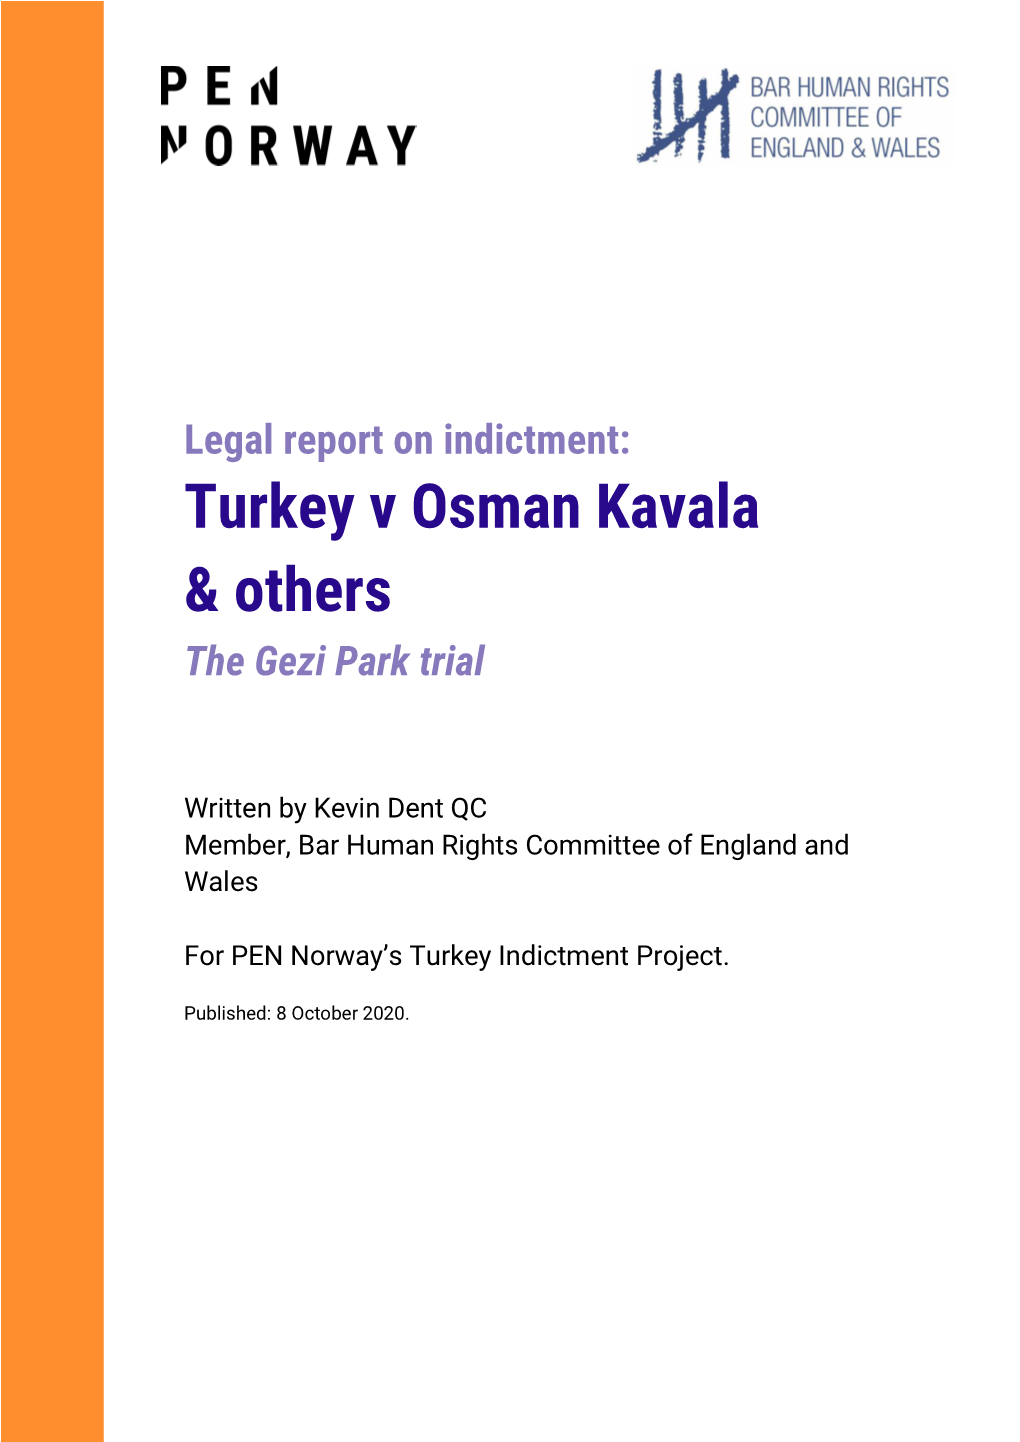 Turkey V Osman Kavala & Others the Gezi Park Trial